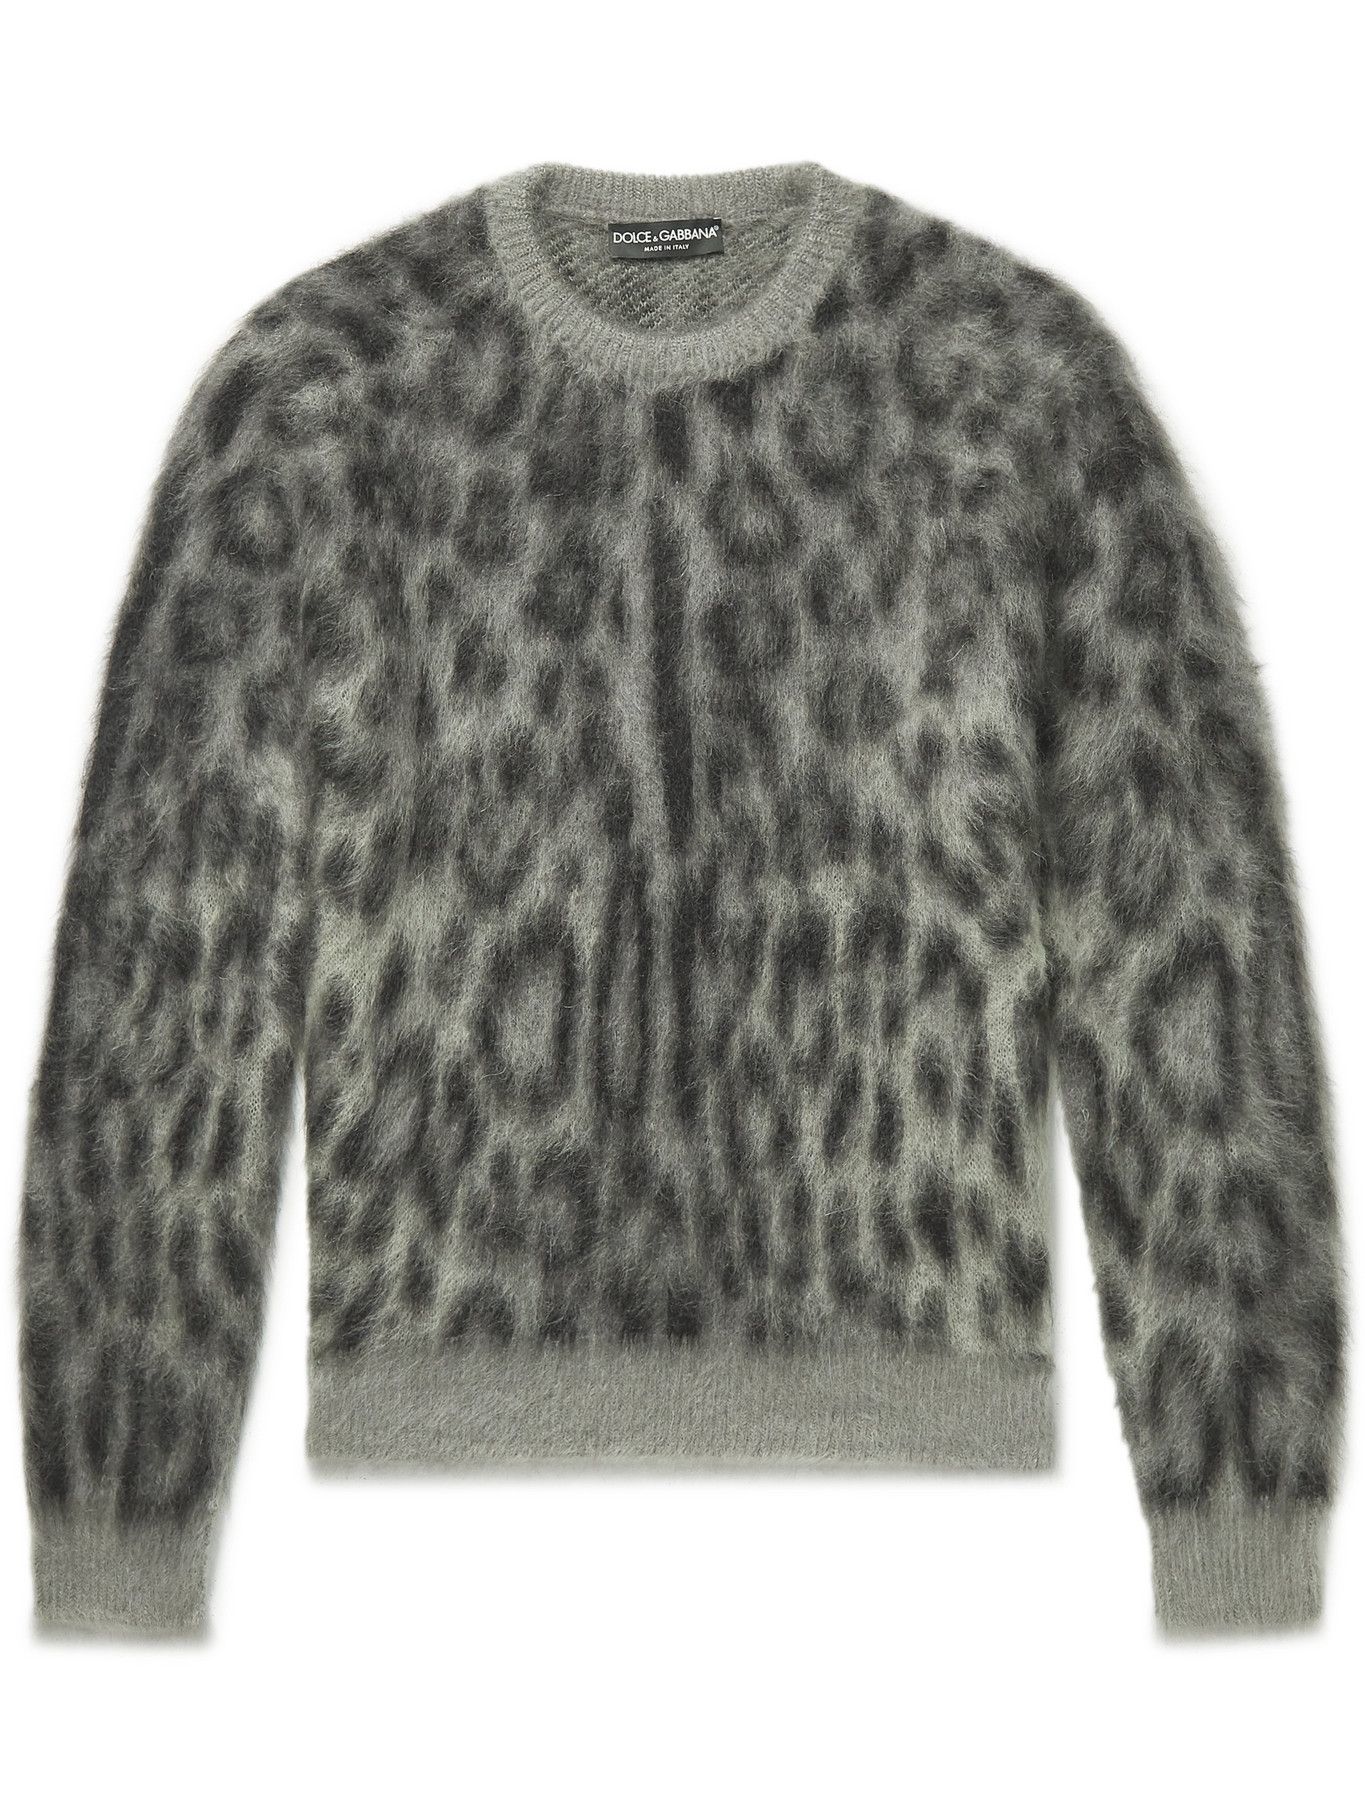 Photo: Dolce & Gabbana - Leopard Mohair-Blend Jacquard Sweater - Gray